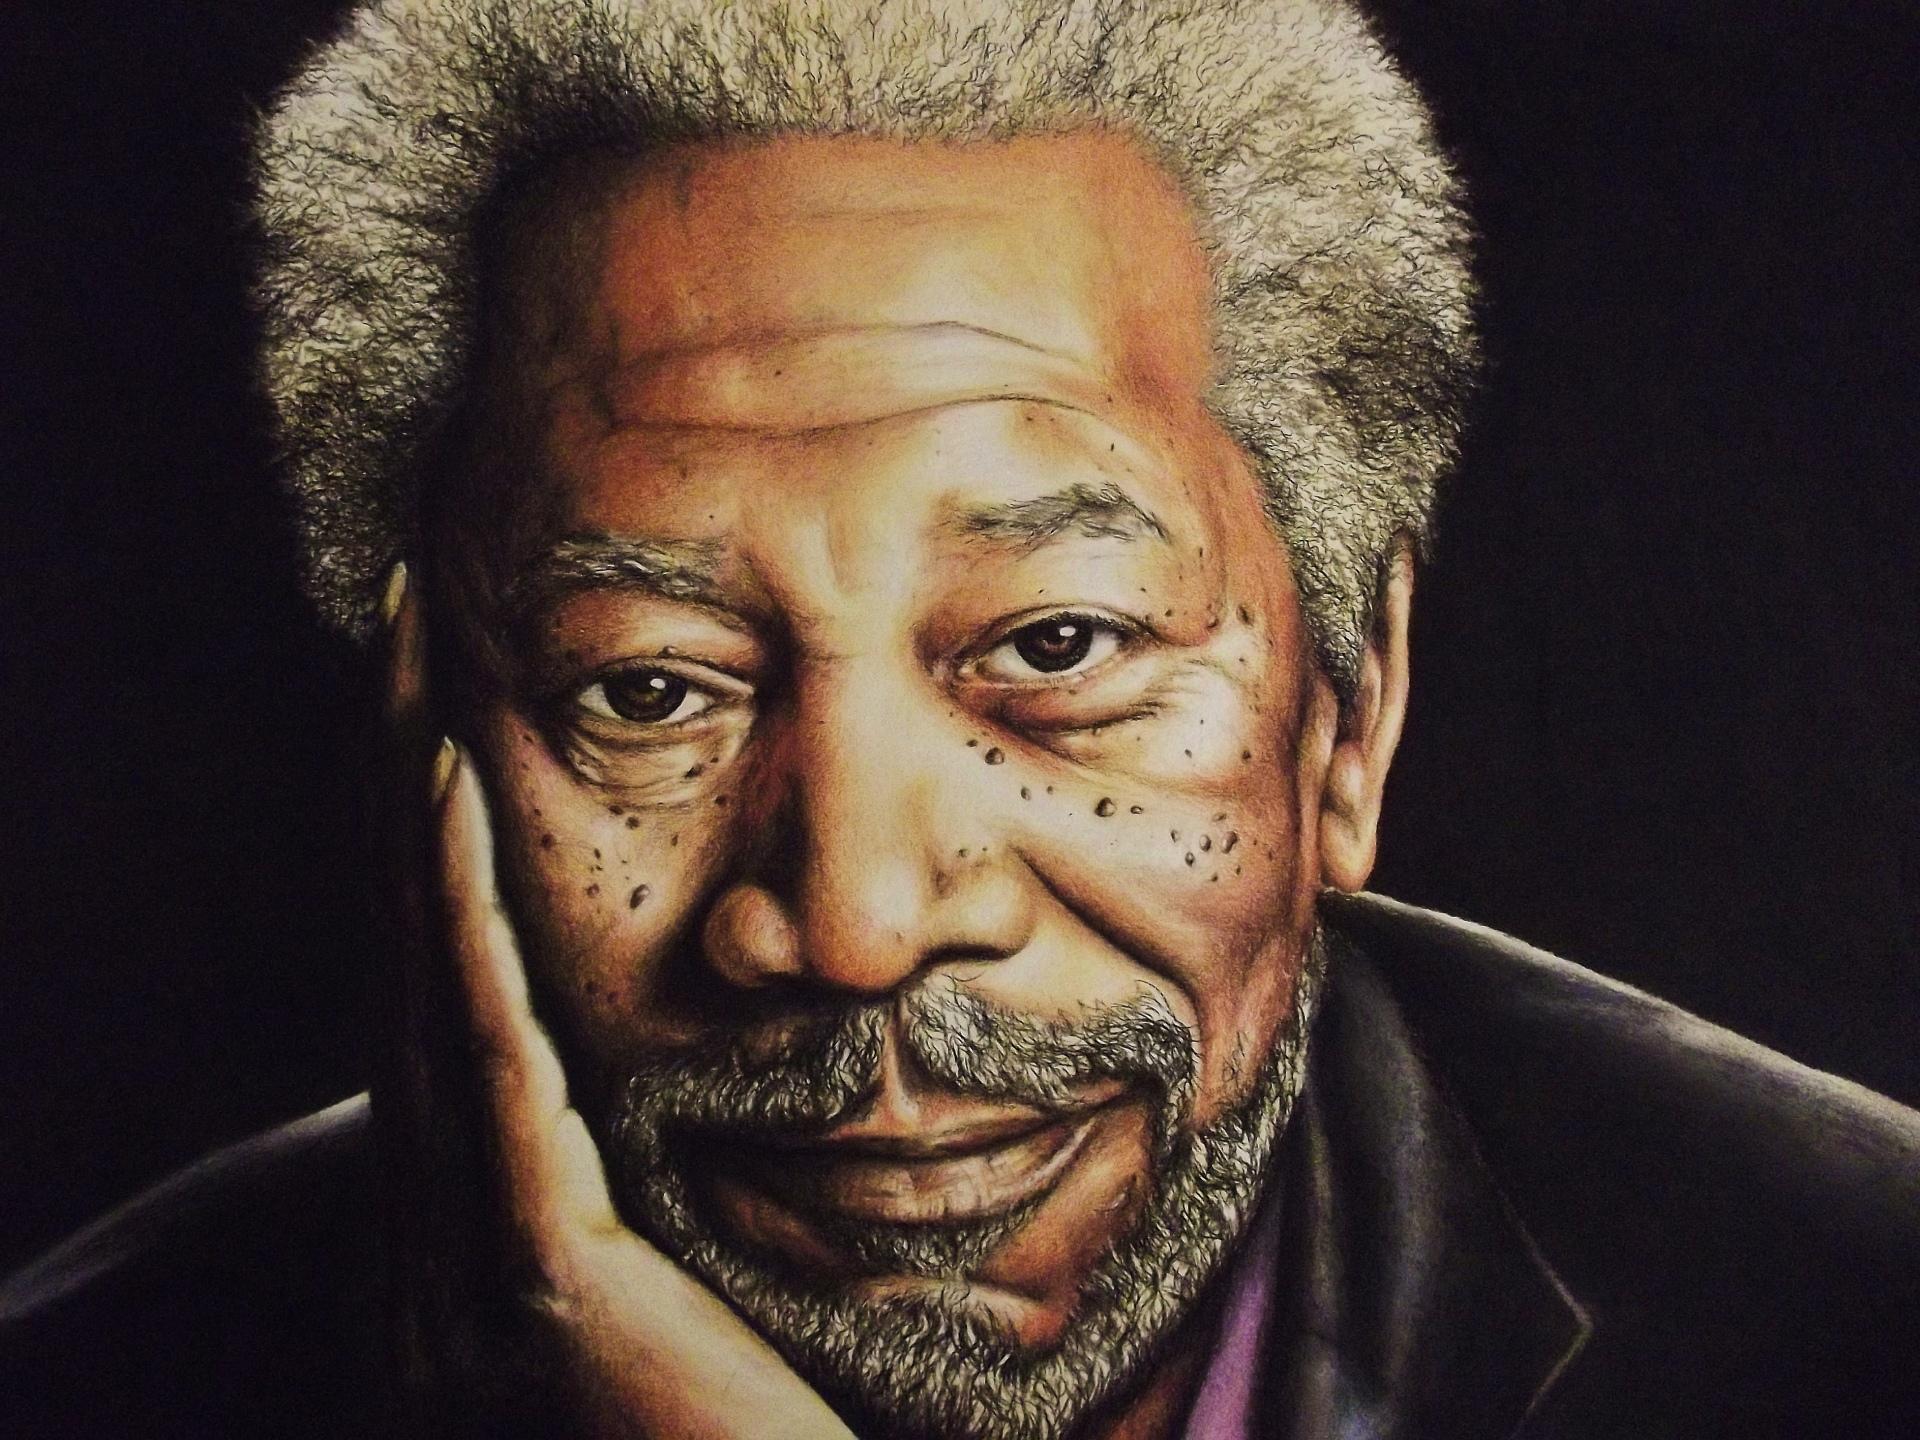 Morgan Freeman at 1024 x 768 size wallpapers HD quality